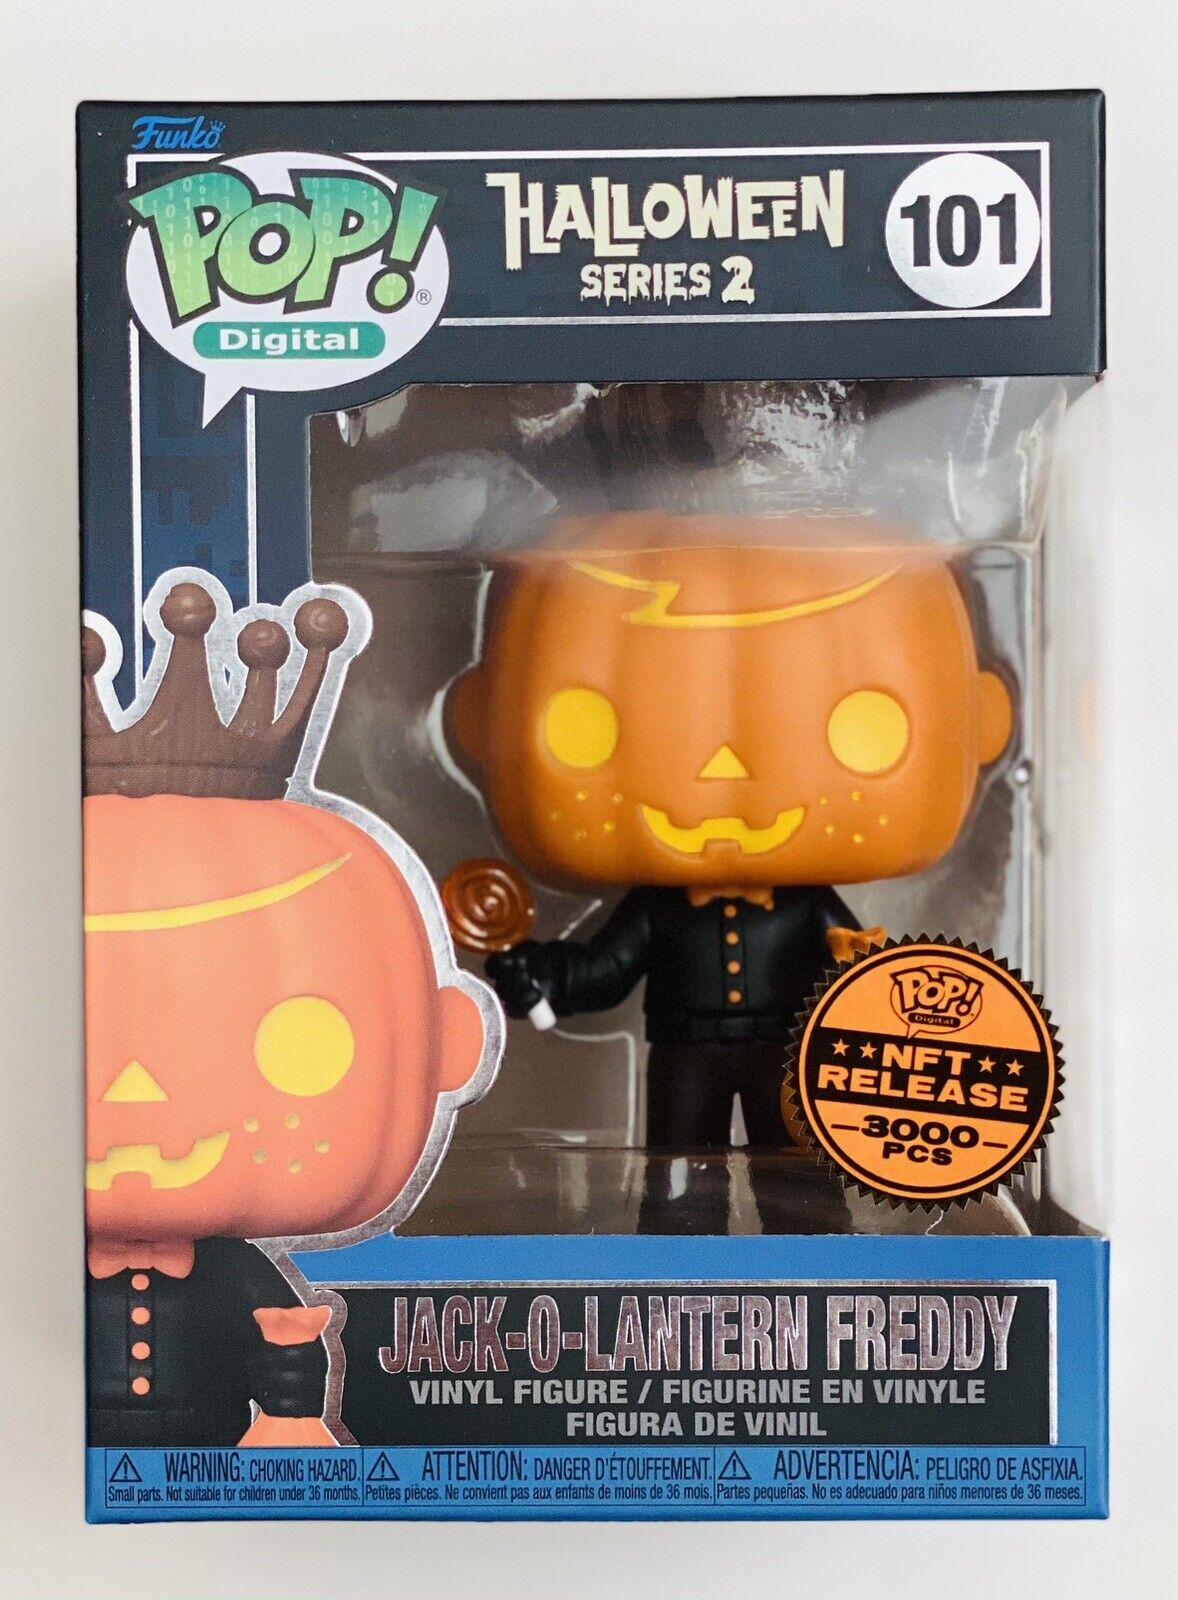 Funko Pop Digital Halloween Series 2 Jack-O-Lantern Freddy 101 LE 3000